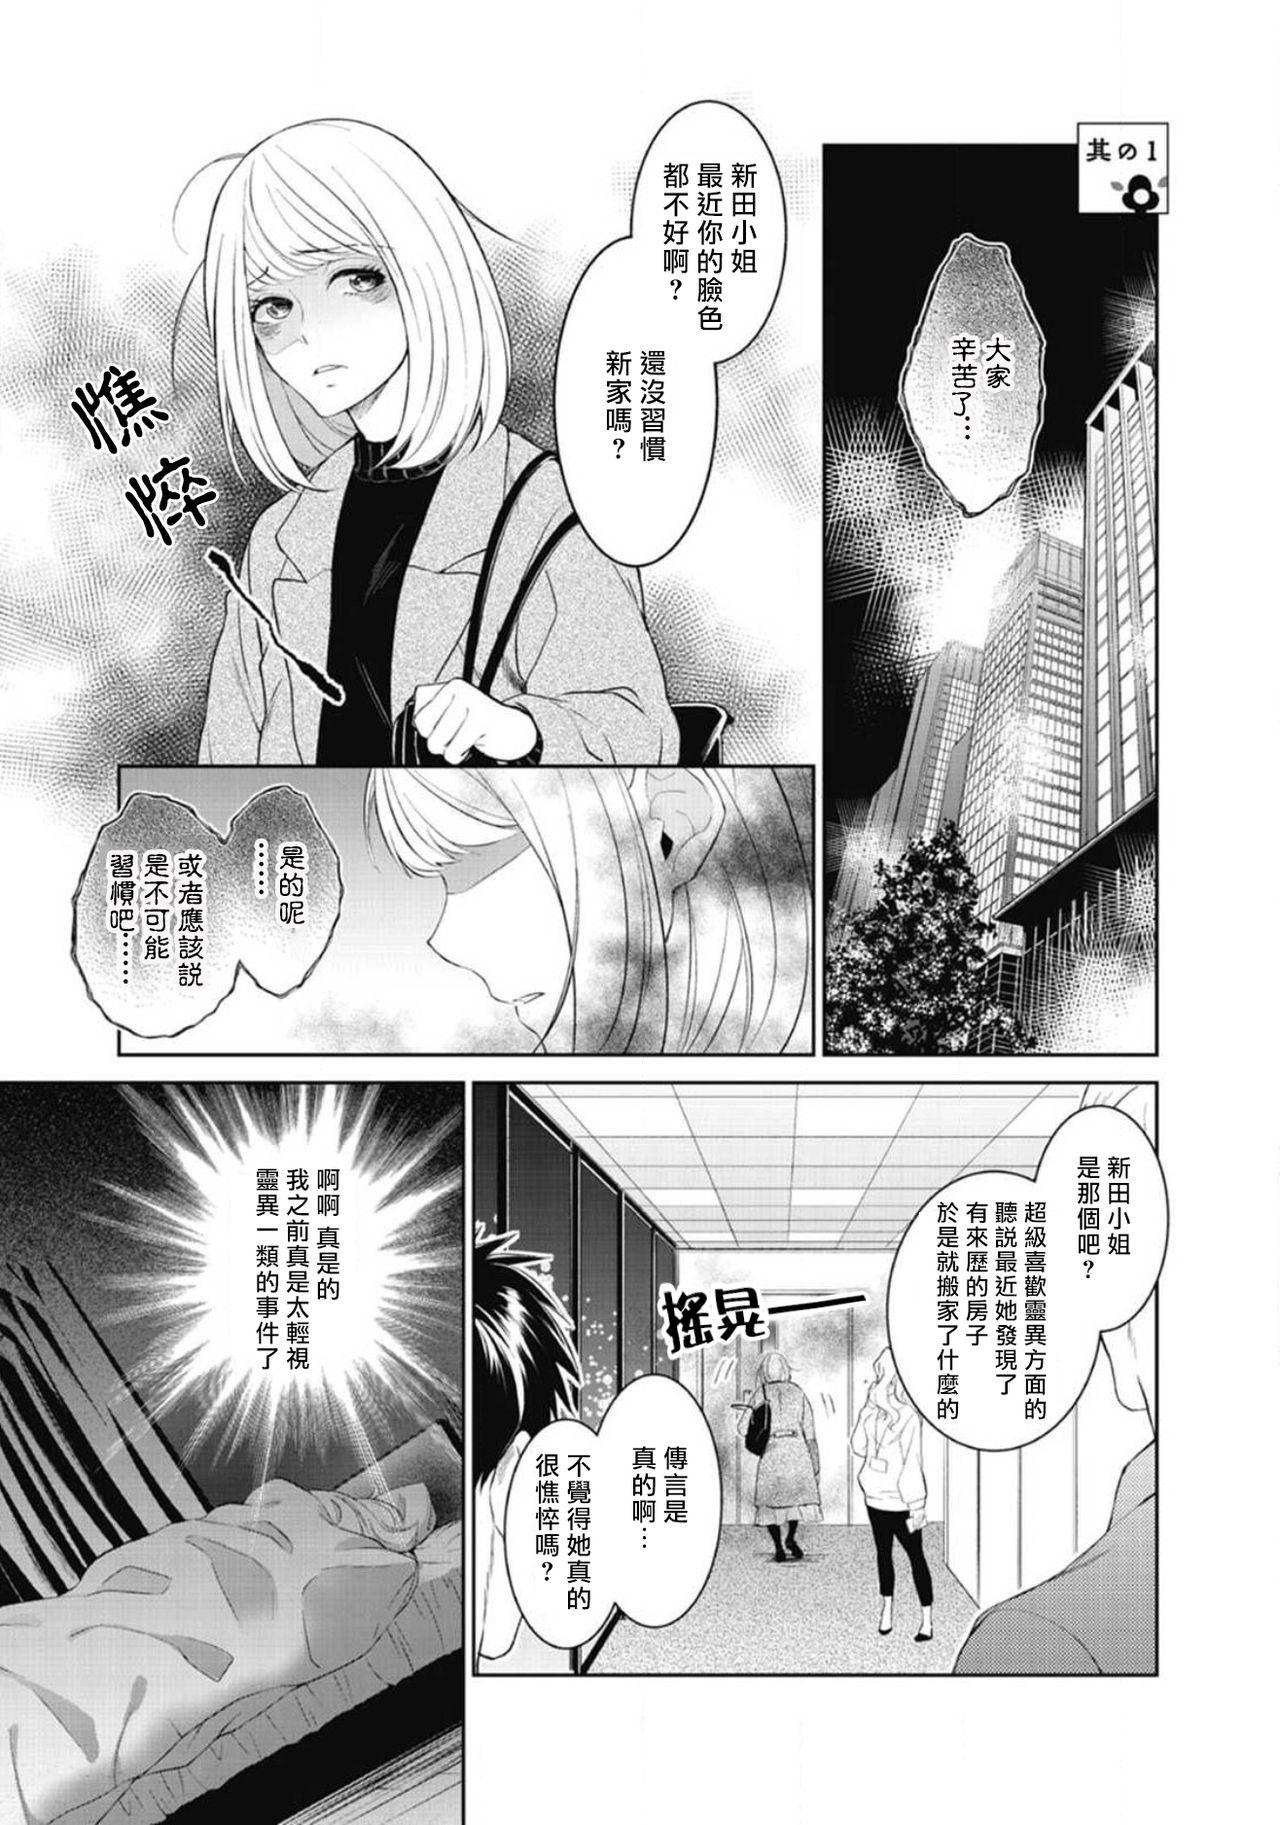 Clit hentai ikemen yūrei ni maiban osowa rete imasu. | 每晚被變態帥哥幽靈襲擊1 Tgirl - Page 5